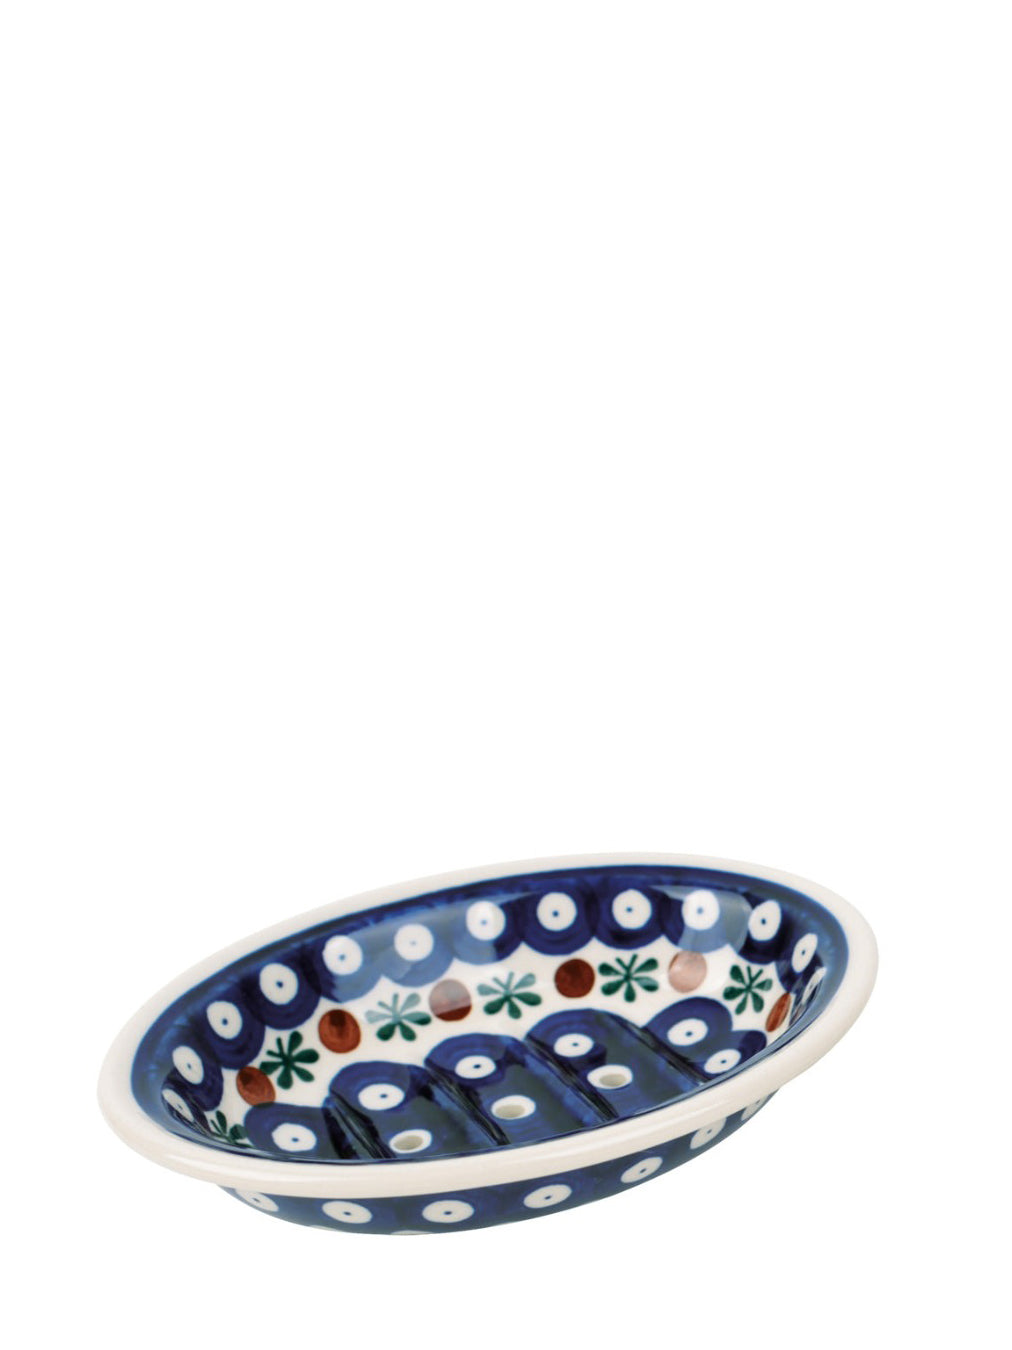 Ceramic soap dish, dark pattern